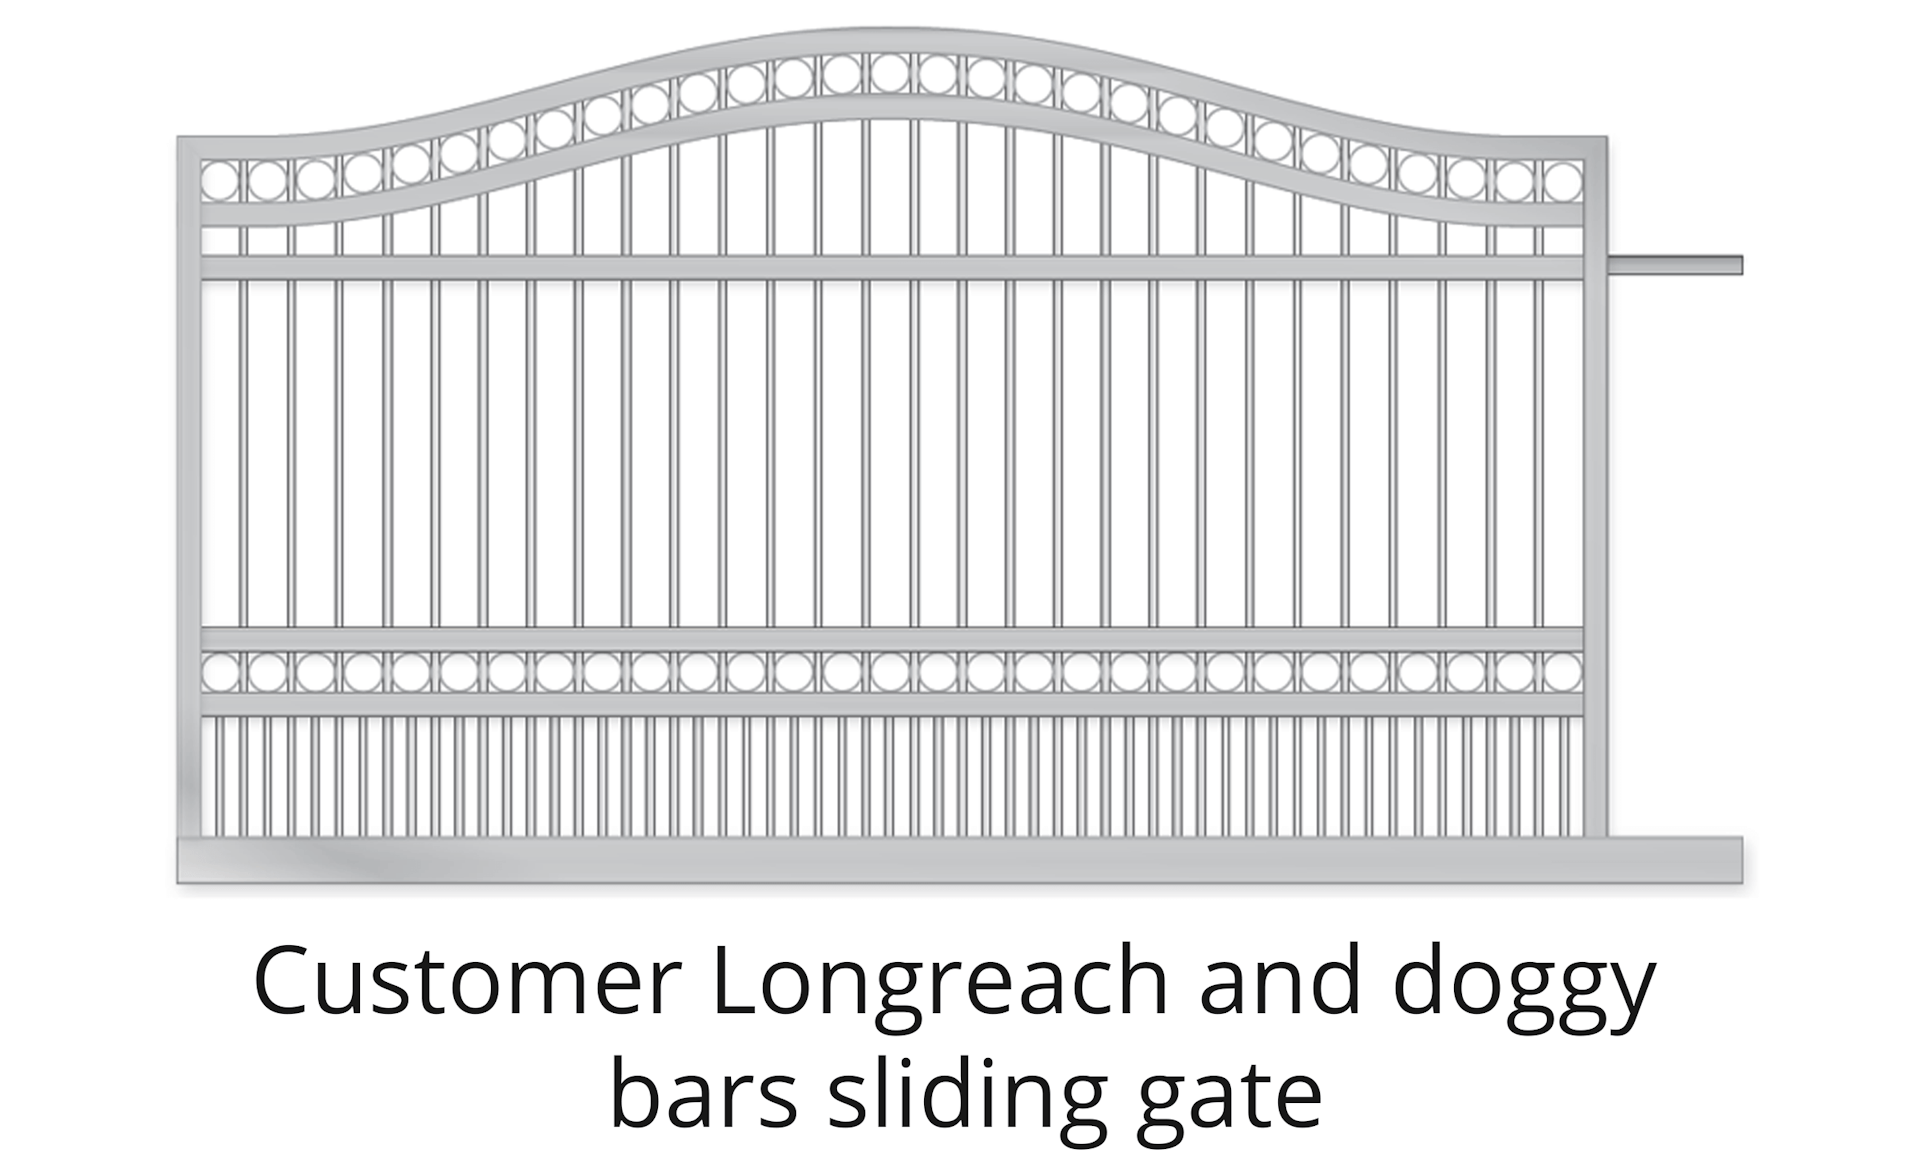 Customer Longreach and doggy bars sliding gate.